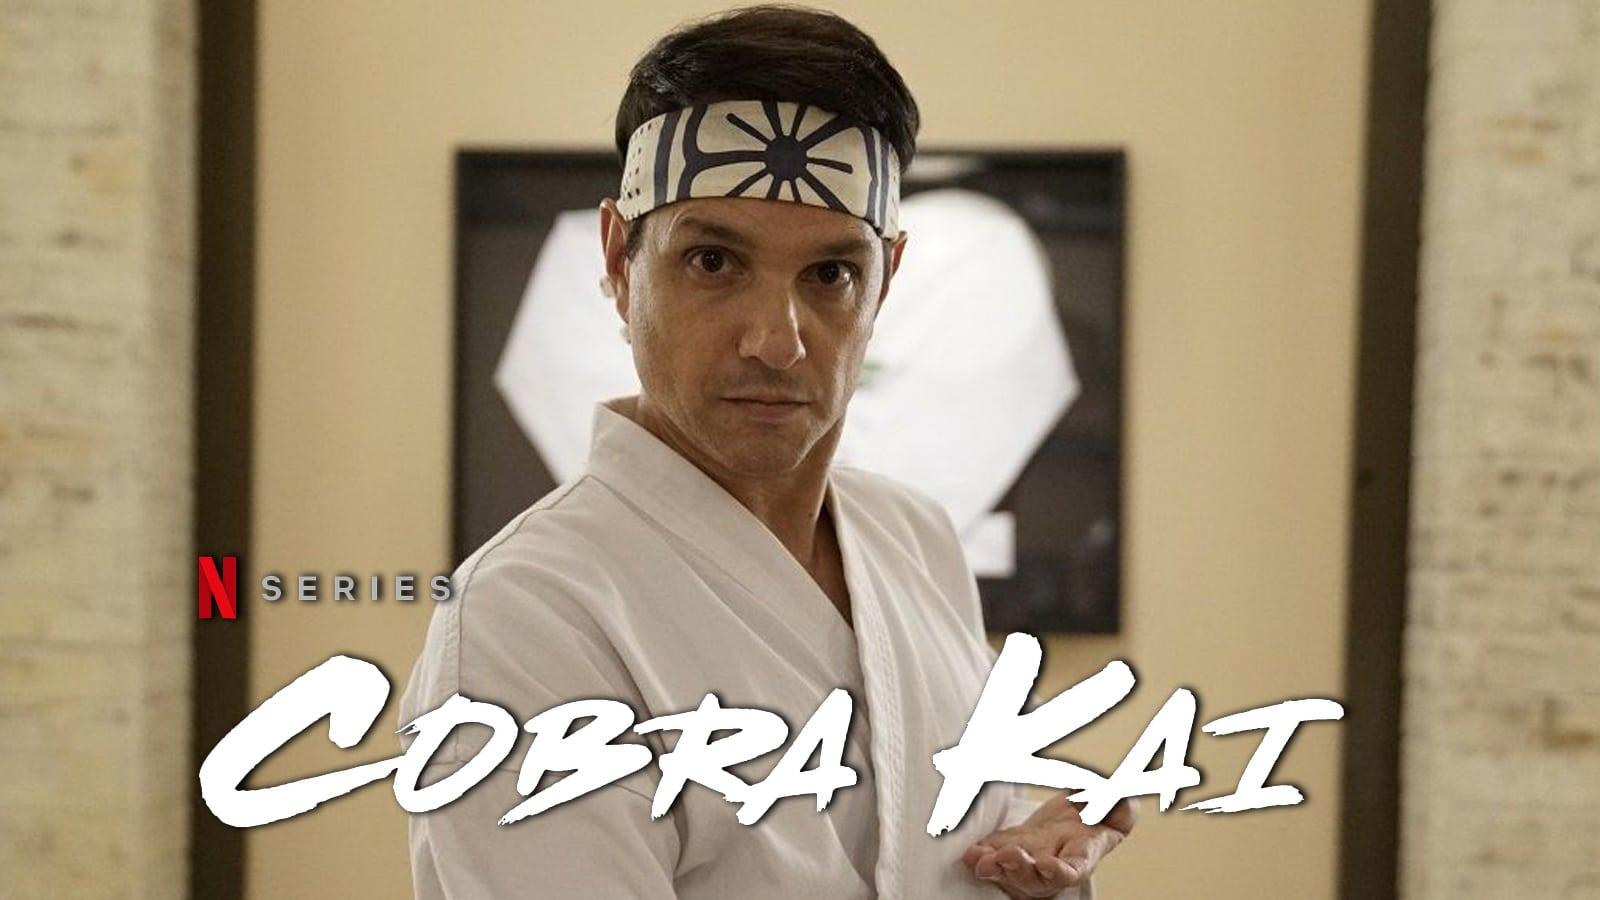 Cobra Kai season 6 release date speculation, plot, cast, and news